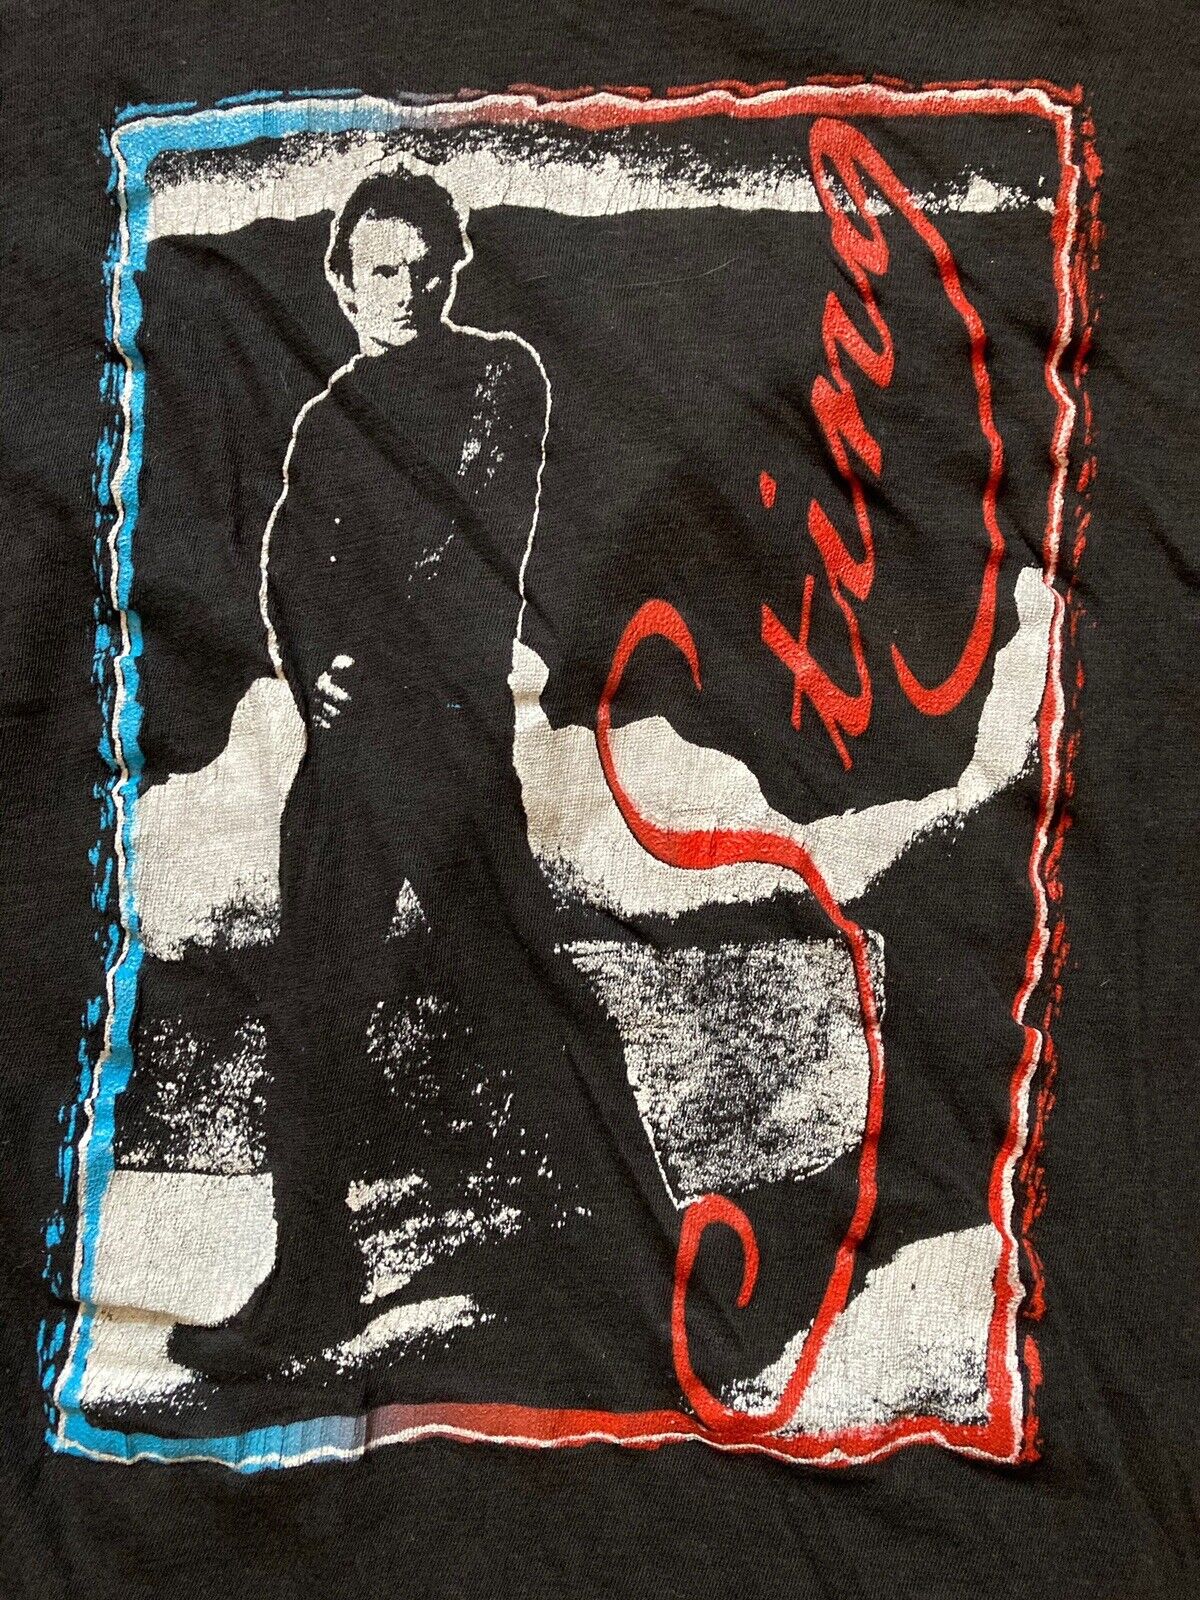 Sting Tour T Shirt vtg 80s Rock band singer XL The Police Black Live Tour